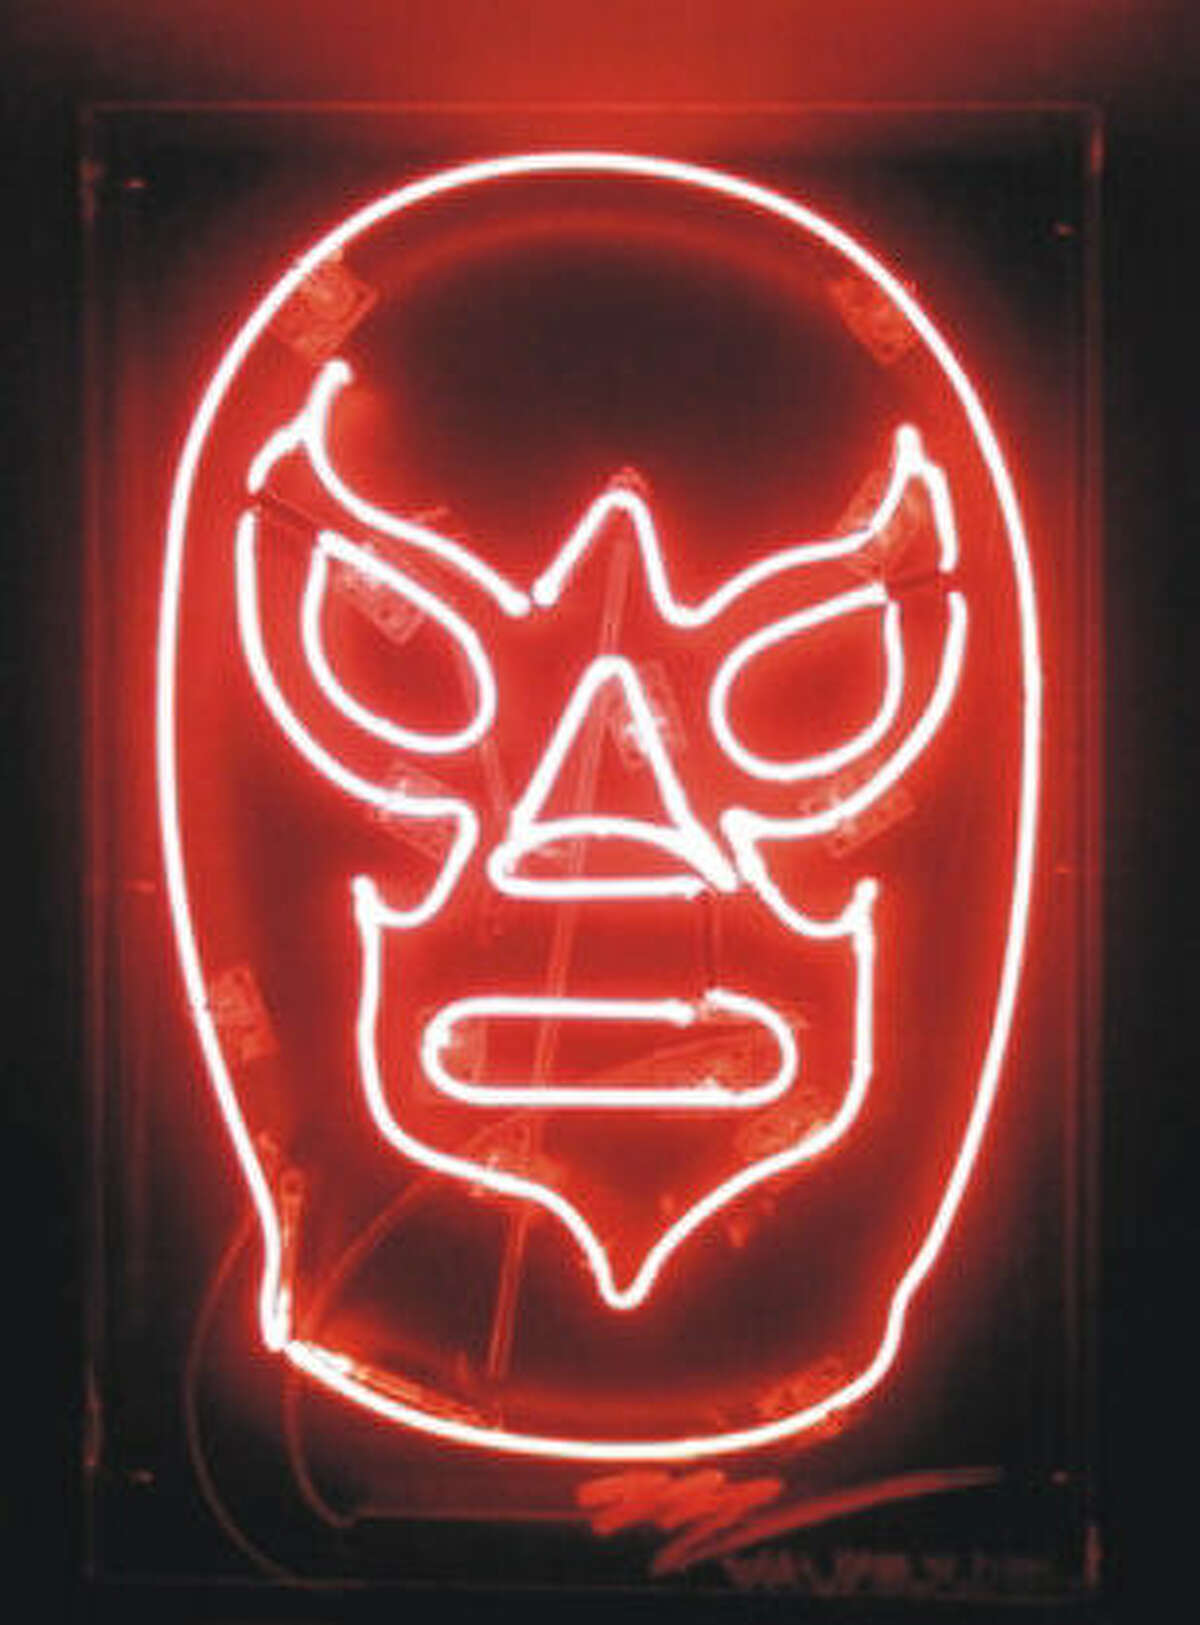 Miguel Valverde's “Hágase la Lucha” is a neon work of a Mexican wrestler's mask.